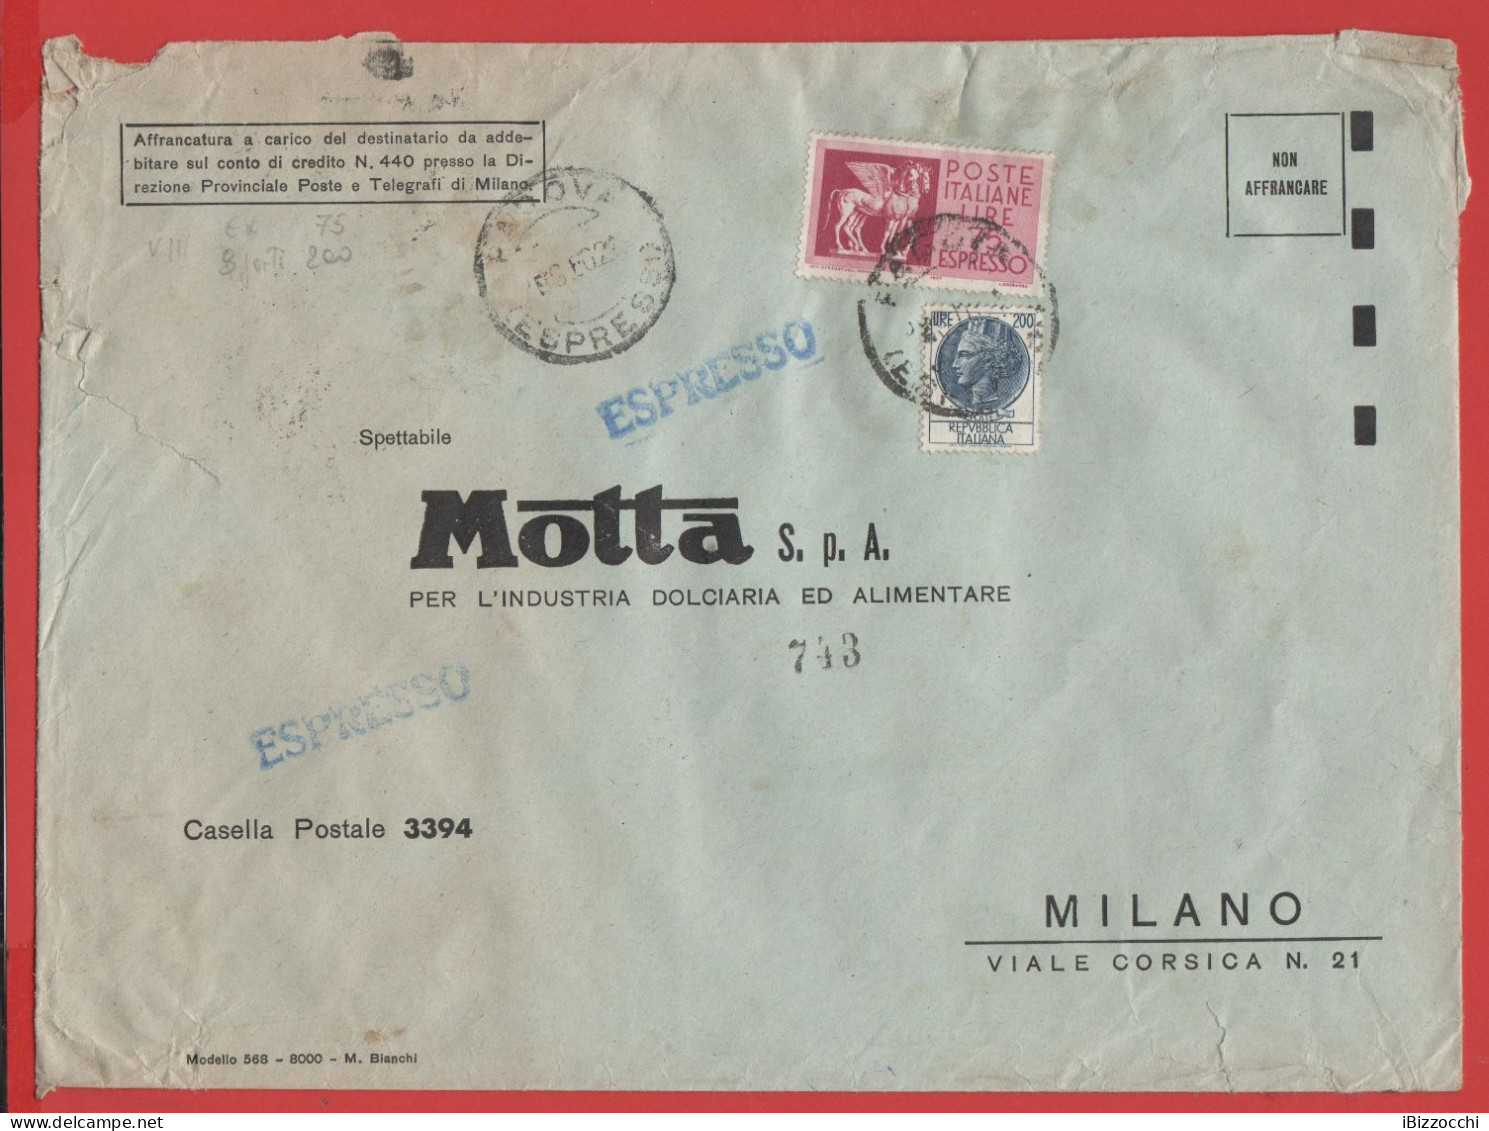 ITALIA - Storia Postale Repubblica - 1960 - 200 Antica Moneta Siracusana + 75 Cavalli Alati - ESPRESSO - Busta Di Grande - 1946-60: Marcofilie